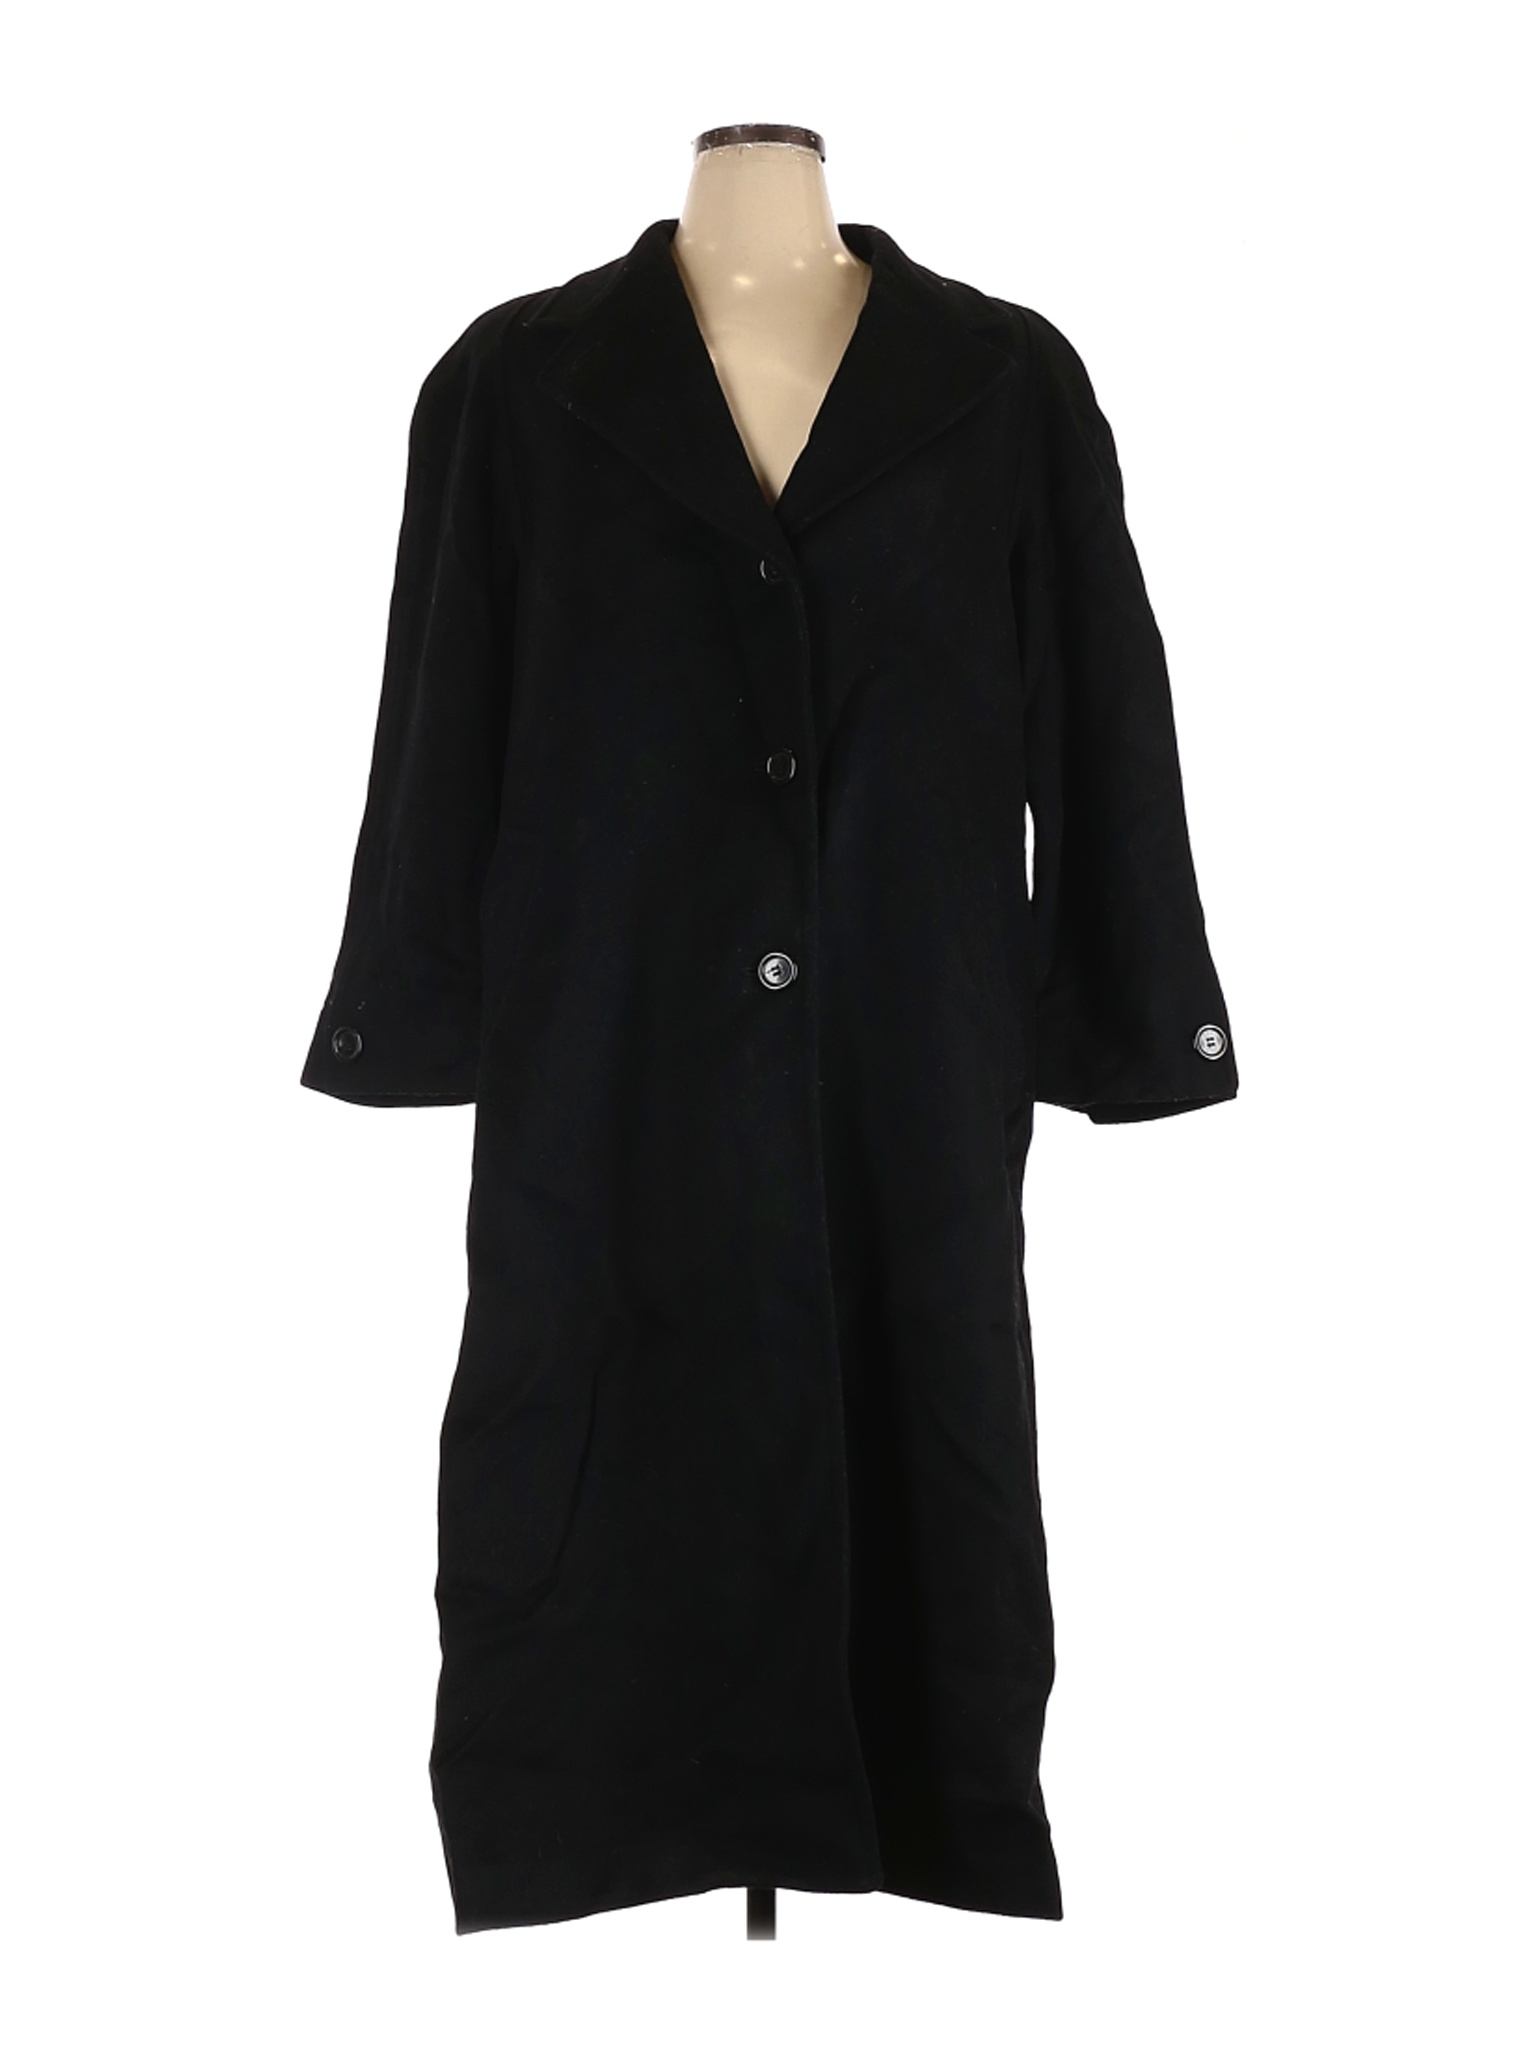 Liz Claiborne Women Black Wool Coat 16 | eBay